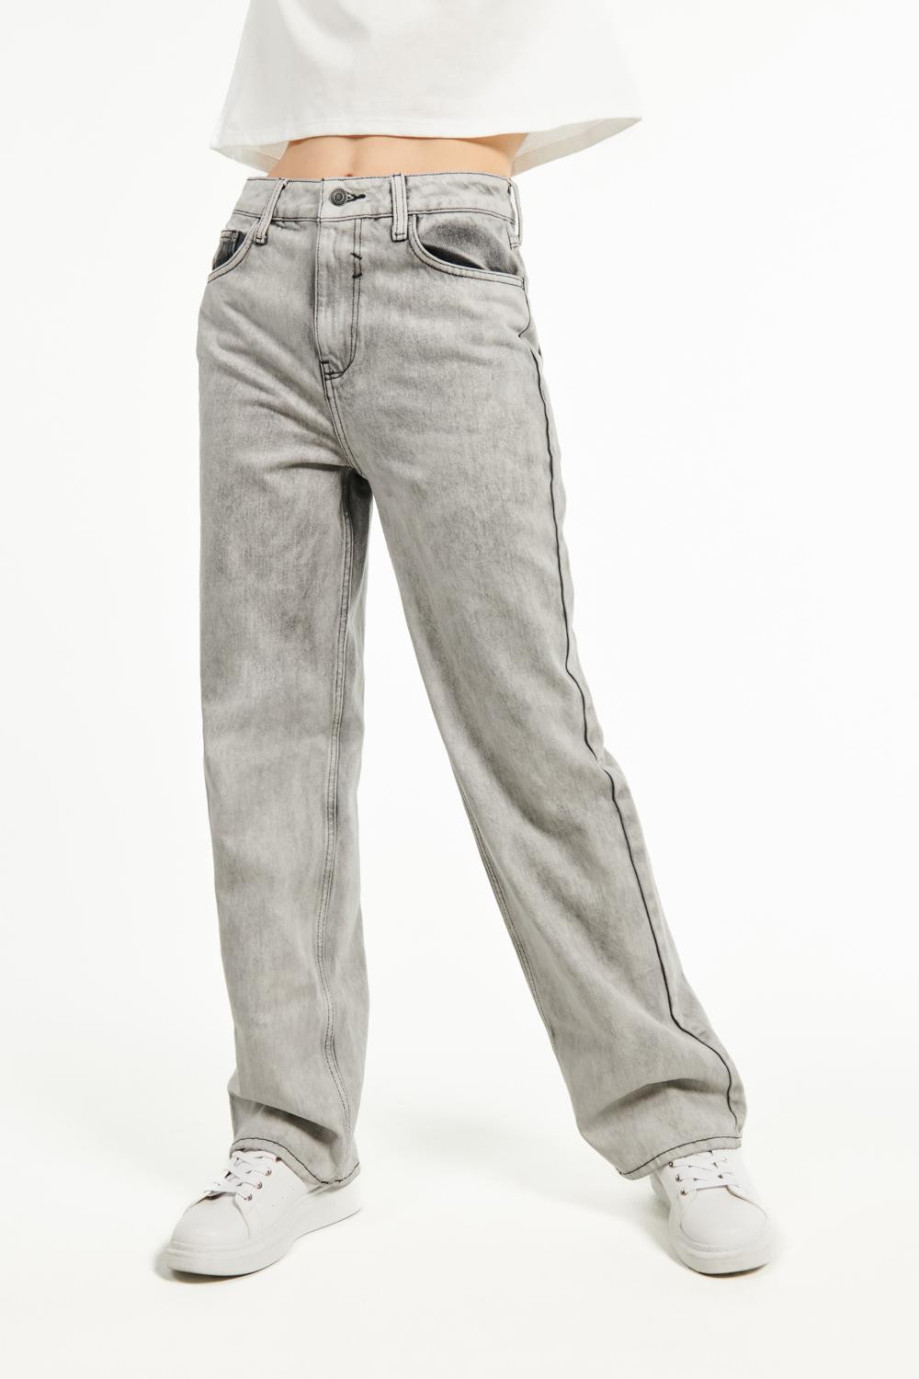 Jean tiro alto 90´S gris oscuro con botas amplias y costuras negras